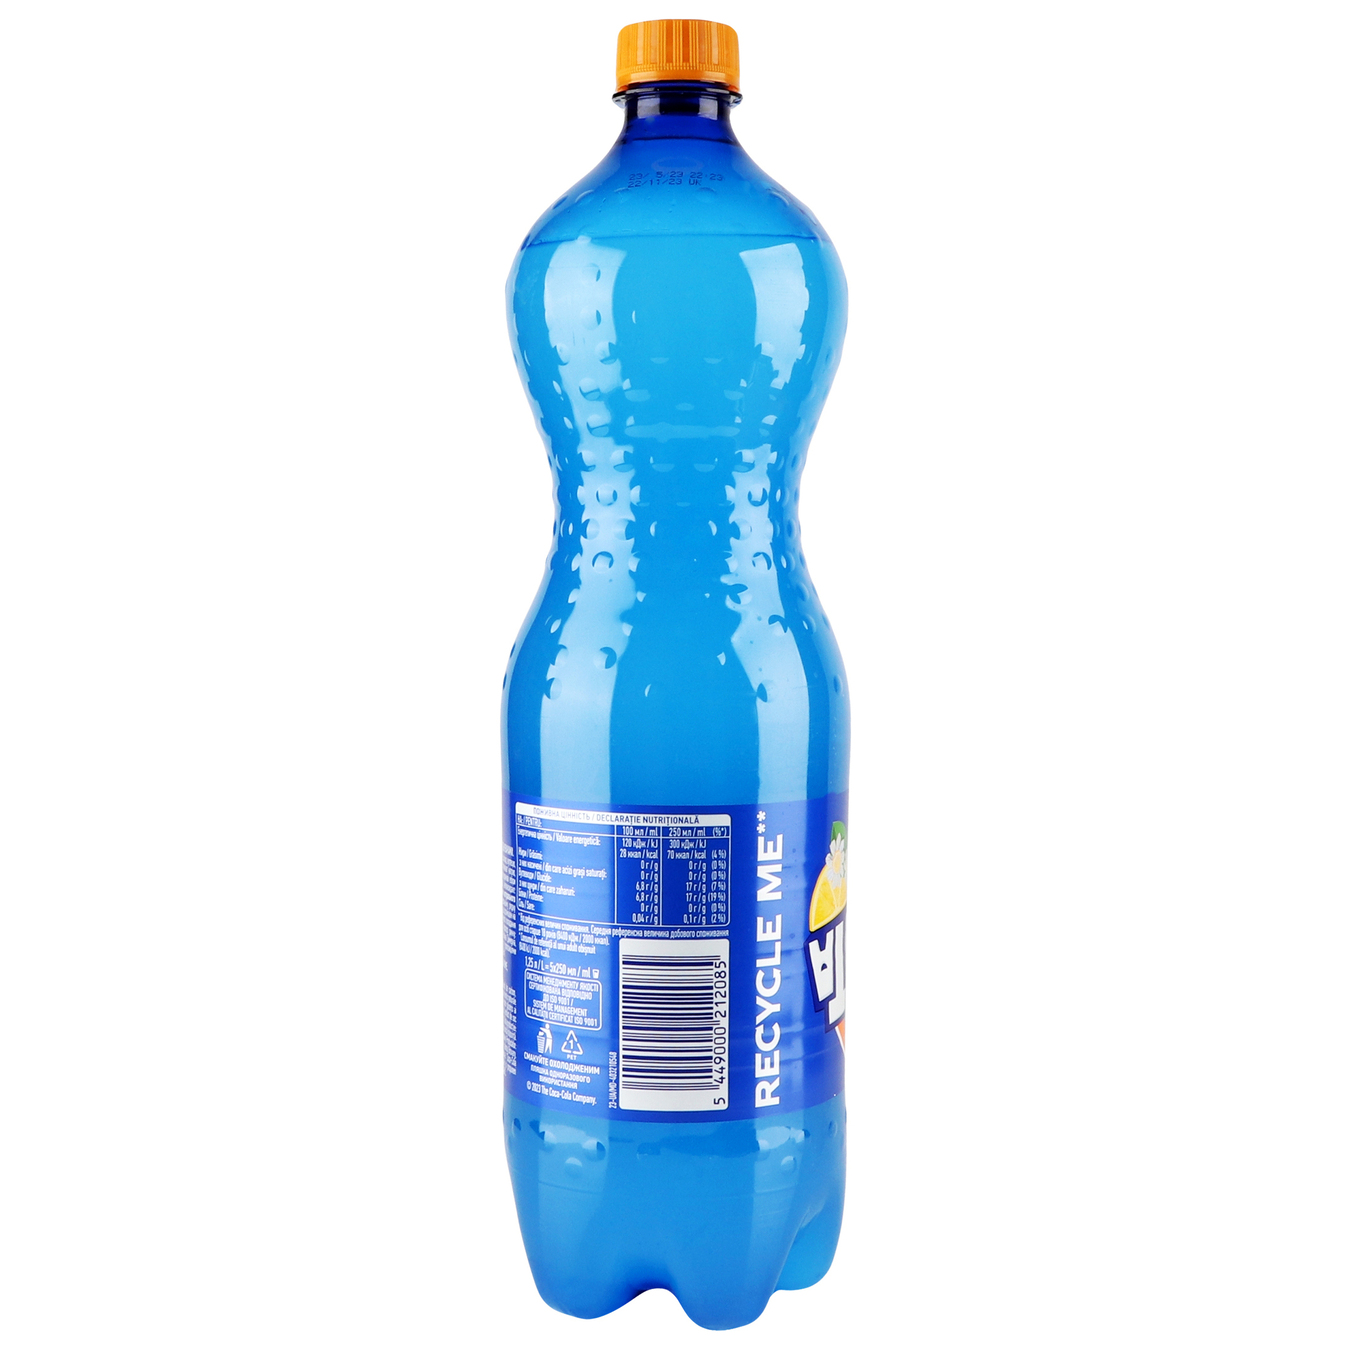 Carbonated drink Fanta Shokata 1.25 l PET 3